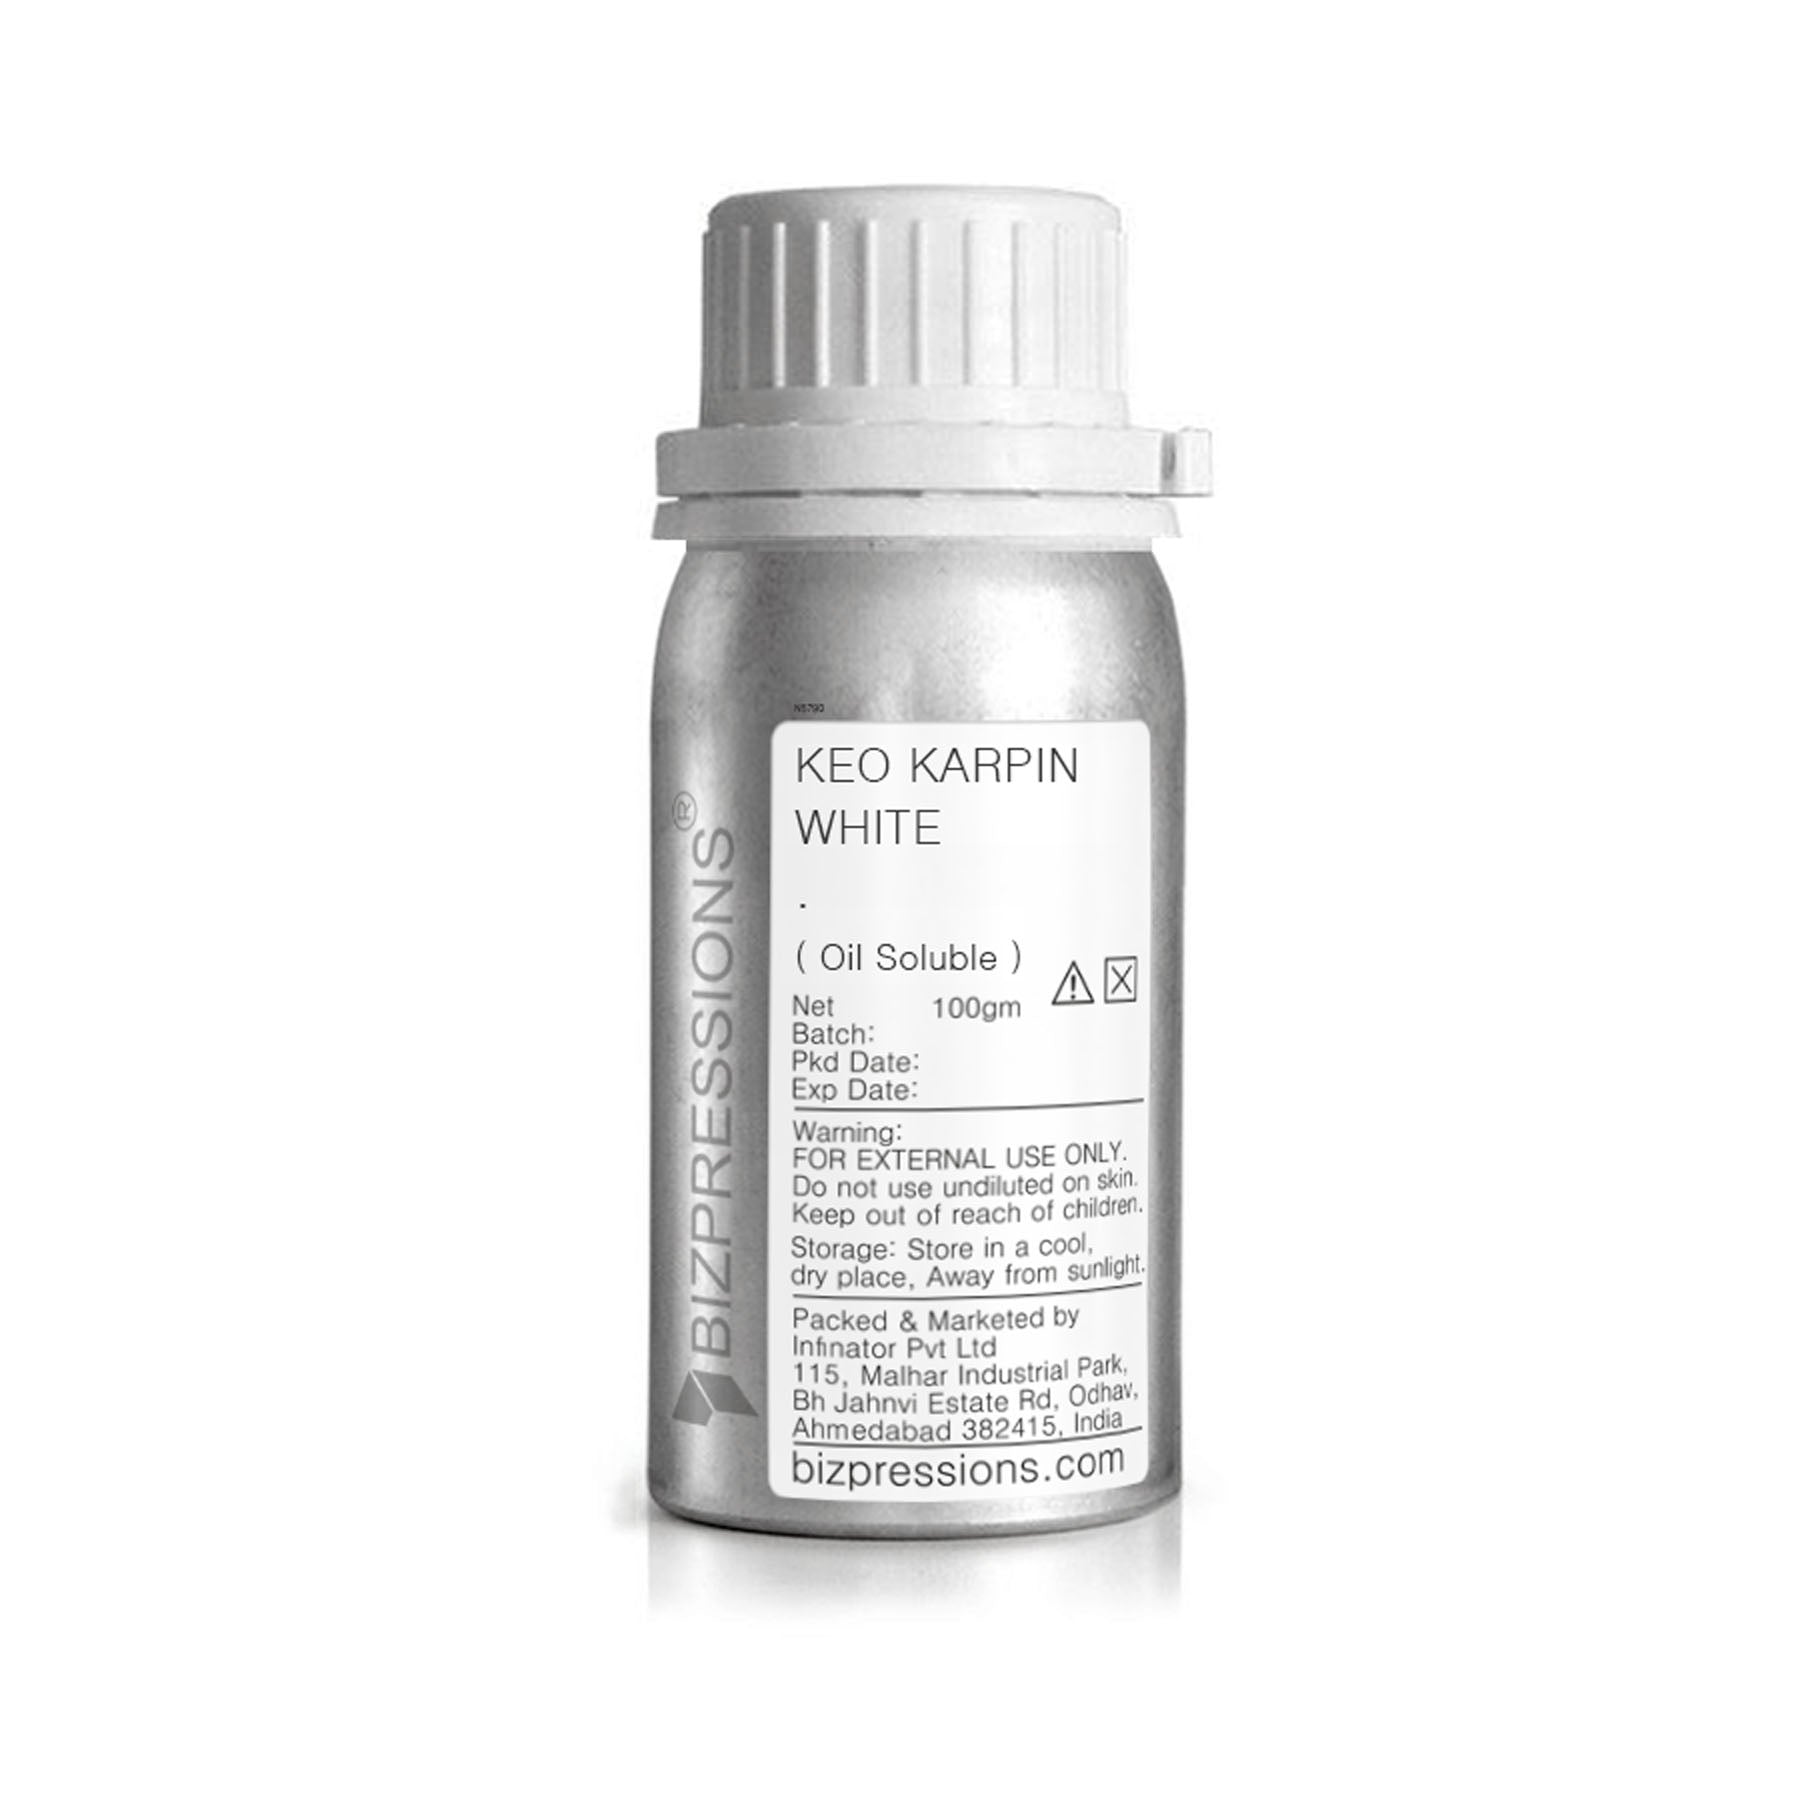 KEO KARPIN WHITE - Fragrance ( Oil Soluble ) - 100 gm